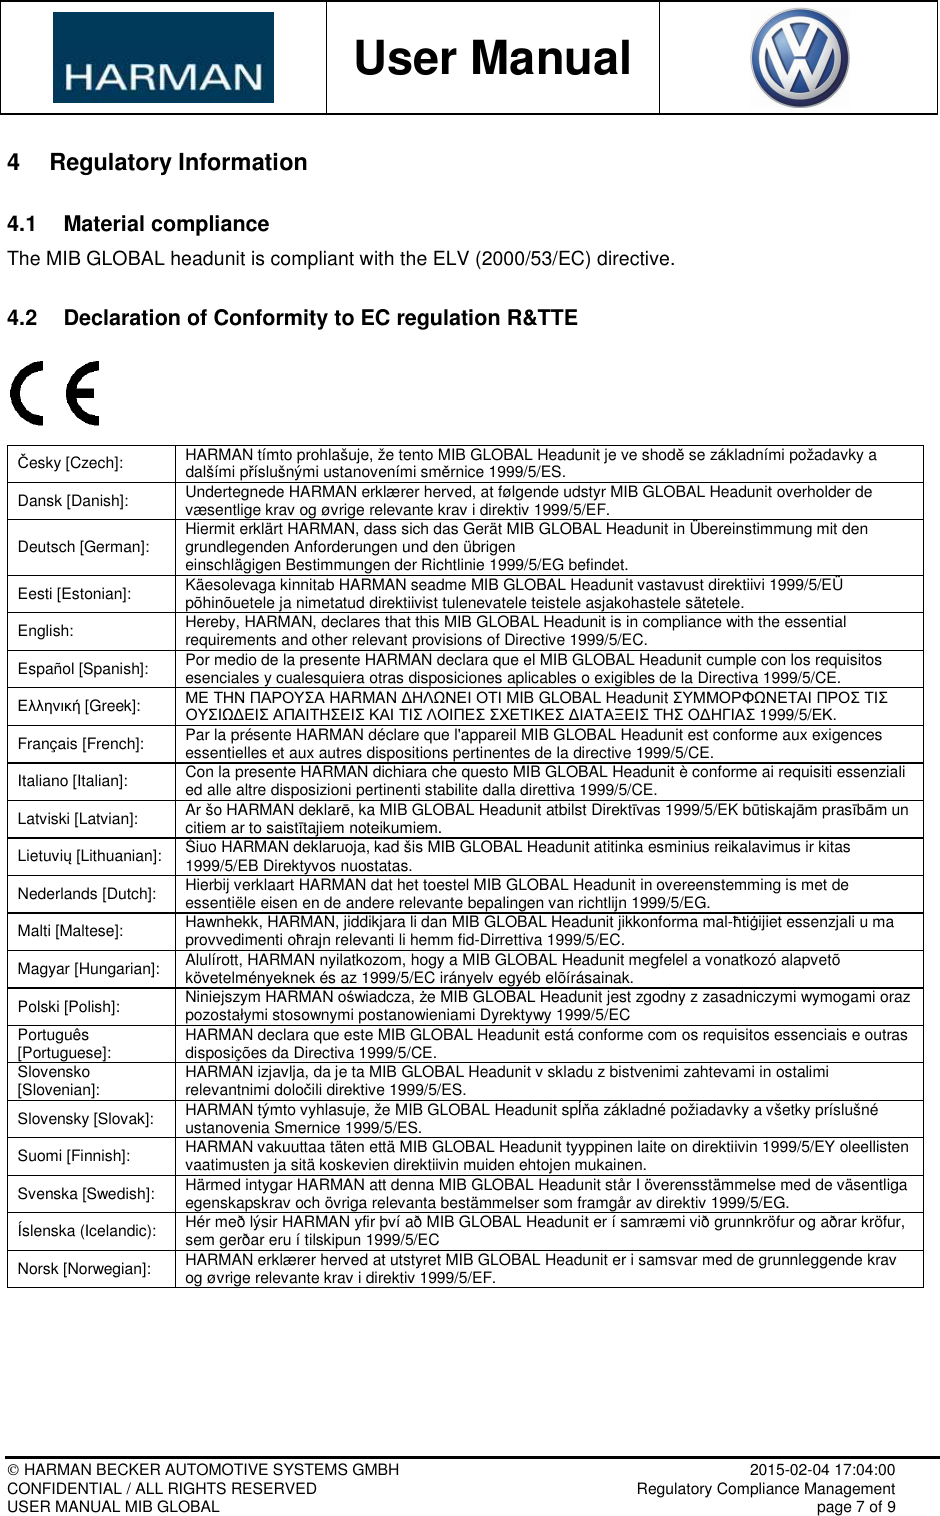           User Manual     HARMAN BECKER AUTOMOTIVE SYSTEMS GMBH    2015-02-04 17:04:00 CONFIDENTIAL / ALL RIGHTS RESERVED     Regulatory Compliance Management USER MANUAL MIB GLOBAL    page 7 of 9  4  Regulatory Information 4.1  Material compliance The MIB GLOBAL headunit is compliant with the ELV (2000/53/EC) directive. 4.2  Declaration of Conformity to EC regulation R&amp;TTE  Česky [Czech]:  HARMAN tímto prohlašuje, že tento MIB GLOBAL Headunit je ve shodě se základními požadavky a dalšími příslušnými ustanoveními směrnice 1999/5/ES. Dansk [Danish]:  Undertegnede HARMAN erklærer herved, at følgende udstyr MIB GLOBAL Headunit overholder de væsentlige krav og øvrige relevante krav i direktiv 1999/5/EF. Deutsch [German]:  Hiermit erklärt HARMAN, dass sich das Gerät MIB GLOBAL Headunit in Übereinstimmung mit den grundlegenden Anforderungen und den übrigen einschlägigen Bestimmungen der Richtlinie 1999/5/EG befindet. Eesti [Estonian]:  Käesolevaga kinnitab HARMAN seadme MIB GLOBAL Headunit vastavust direktiivi 1999/5/EÜ põhinõuetele ja nimetatud direktiivist tulenevatele teistele asjakohastele sätetele. English:  Hereby, HARMAN, declares that this MIB GLOBAL Headunit is in compliance with the essential requirements and other relevant provisions of Directive 1999/5/EC. Español [Spanish]:  Por medio de la presente HARMAN declara que el MIB GLOBAL Headunit cumple con los requisitos esenciales y cualesquiera otras disposiciones aplicables o exigibles de la Directiva 1999/5/CE. Ελληνική [Greek]:  ΜΕ ΤΗΝ ΠΑΡΟΥΣΑ HARMAN ∆ΗΛΩΝΕΙ ΟΤΙ MIB GLOBAL Headunit ΣΥΜΜΟΡΦΩΝΕΤΑΙ ΠΡΟΣ ΤΙΣ ΟΥΣΙΩ∆ΕΙΣ ΑΠΑΙΤΗΣΕΙΣ ΚΑΙ ΤΙΣ ΛΟΙΠΕΣ ΣΧΕΤΙΚΕΣ ∆ΙΑΤΑΞΕΙΣ ΤΗΣ Ο∆ΗΓΙΑΣ 1999/5/ΕΚ. Français [French]:  Par la présente HARMAN déclare que l&apos;appareil MIB GLOBAL Headunit est conforme aux exigences essentielles et aux autres dispositions pertinentes de la directive 1999/5/CE. Italiano [Italian]:  Con la presente HARMAN dichiara che questo MIB GLOBAL Headunit è conforme ai requisiti essenziali ed alle altre disposizioni pertinenti stabilite dalla direttiva 1999/5/CE. Latviski [Latvian]:  Ar šo HARMAN deklarē, ka MIB GLOBAL Headunit atbilst Direktīvas 1999/5/EK būtiskajām prasībām un citiem ar to saistītajiem noteikumiem. Lietuvių [Lithuanian]:  Šiuo HARMAN deklaruoja, kad šis MIB GLOBAL Headunit atitinka esminius reikalavimus ir kitas 1999/5/EB Direktyvos nuostatas. Nederlands [Dutch]:  Hierbij verklaart HARMAN dat het toestel MIB GLOBAL Headunit in overeenstemming is met de essentiële eisen en de andere relevante bepalingen van richtlijn 1999/5/EG. Malti [Maltese]:  Hawnhekk, HARMAN, jiddikjara li dan MIB GLOBAL Headunit jikkonforma mal-ħtiġijiet essenzjali u ma provvedimenti oħrajn relevanti li hemm fid-Dirrettiva 1999/5/EC. Magyar [Hungarian]:  Alulírott, HARMAN nyilatkozom, hogy a MIB GLOBAL Headunit megfelel a vonatkozó alapvetõ követelményeknek és az 1999/5/EC irányelv egyéb elõírásainak. Polski [Polish]:  Niniejszym HARMAN oświadcza, że MIB GLOBAL Headunit jest zgodny z zasadniczymi wymogami oraz pozostałymi stosownymi postanowieniami Dyrektywy 1999/5/EC Português [Portuguese]:  HARMAN declara que este MIB GLOBAL Headunit está conforme com os requisitos essenciais e outras disposições da Directiva 1999/5/CE. Slovensko [Slovenian]:  HARMAN izjavlja, da je ta MIB GLOBAL Headunit v skladu z bistvenimi zahtevami in ostalimi relevantnimi določili direktive 1999/5/ES. Slovensky [Slovak]:  HARMAN týmto vyhlasuje, že MIB GLOBAL Headunit spĺňa základné požiadavky a všetky príslušné ustanovenia Smernice 1999/5/ES. Suomi [Finnish]:  HARMAN vakuuttaa täten että MIB GLOBAL Headunit tyyppinen laite on direktiivin 1999/5/EY oleellisten vaatimusten ja sitä koskevien direktiivin muiden ehtojen mukainen. Svenska [Swedish]:  Härmed intygar HARMAN att denna MIB GLOBAL Headunit står I överensstämmelse med de väsentliga egenskapskrav och övriga relevanta bestämmelser som framgår av direktiv 1999/5/EG. Íslenska (Icelandic):  Hér með lýsir HARMAN yfir því að MIB GLOBAL Headunit er í samræmi við grunnkröfur og aðrar kröfur, sem gerðar eru í tilskipun 1999/5/EC Norsk [Norwegian]:  HARMAN erklærer herved at utstyret MIB GLOBAL Headunit er i samsvar med de grunnleggende krav og øvrige relevante krav i direktiv 1999/5/EF.    